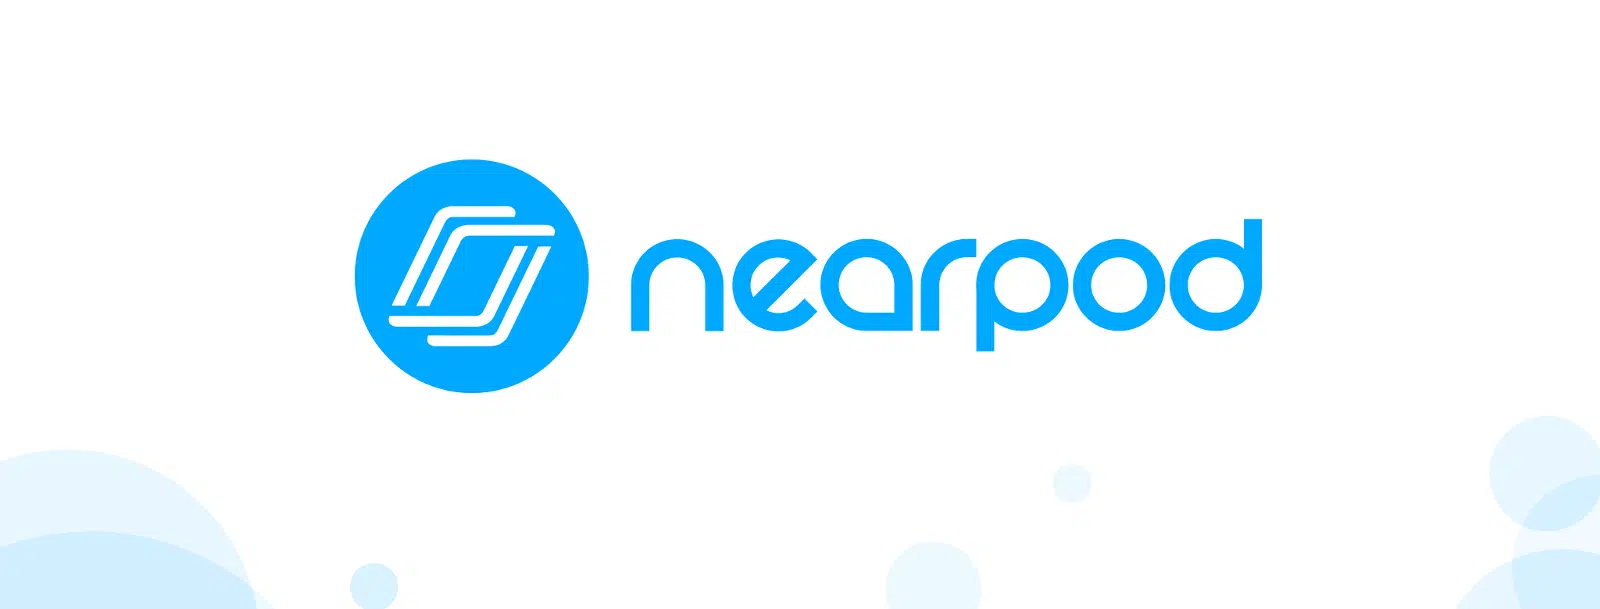 nearpod logo image